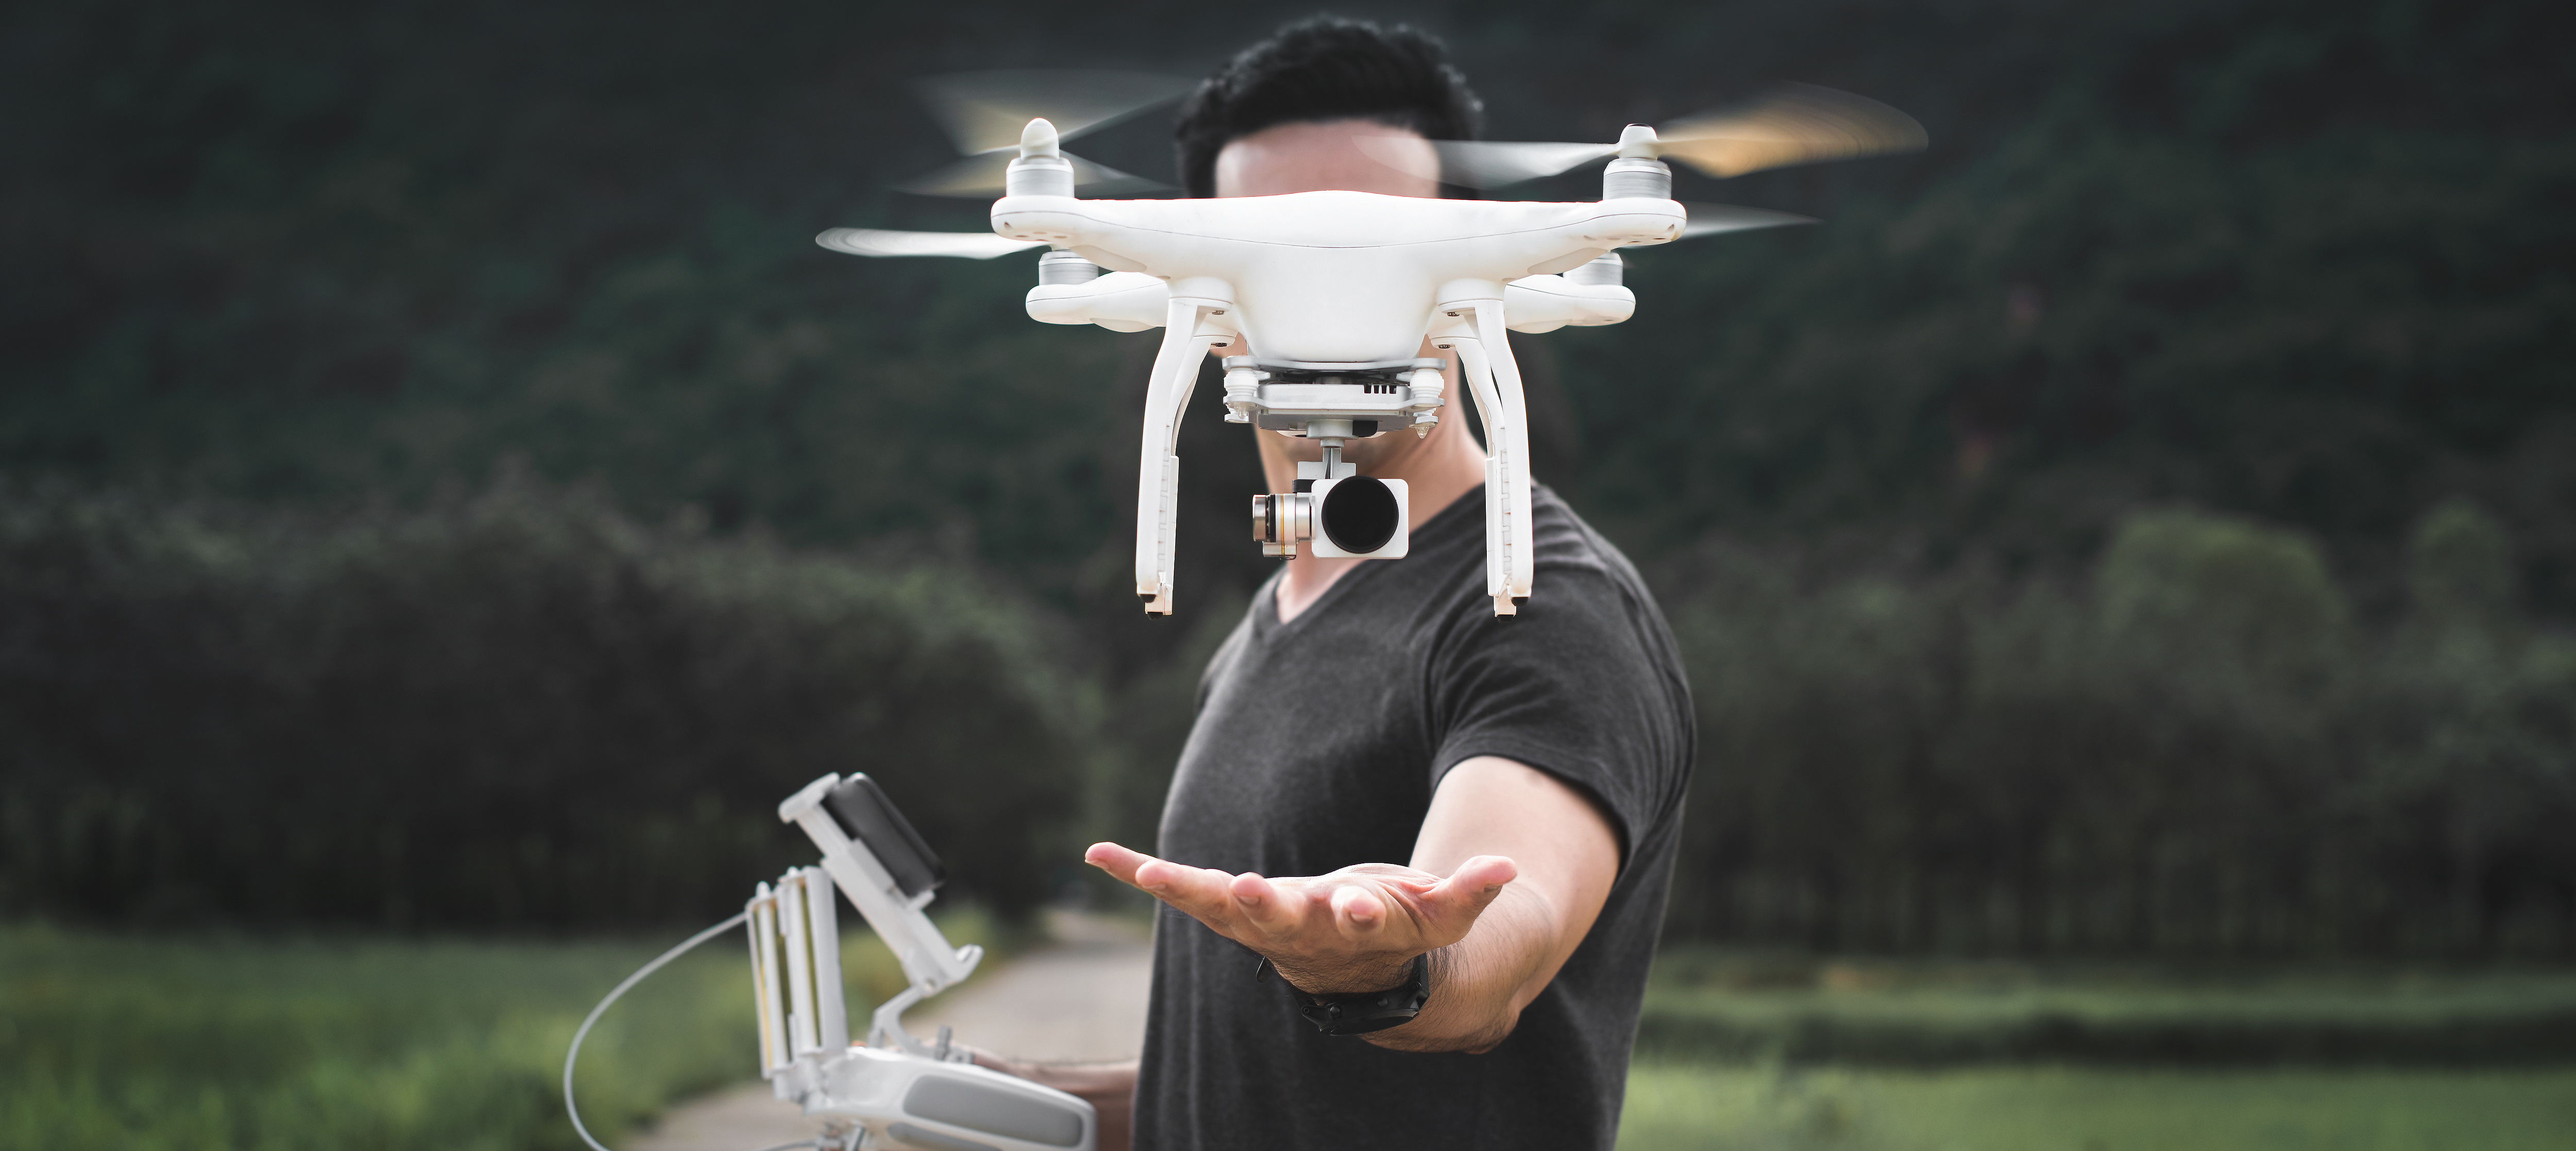 A man flies a drone